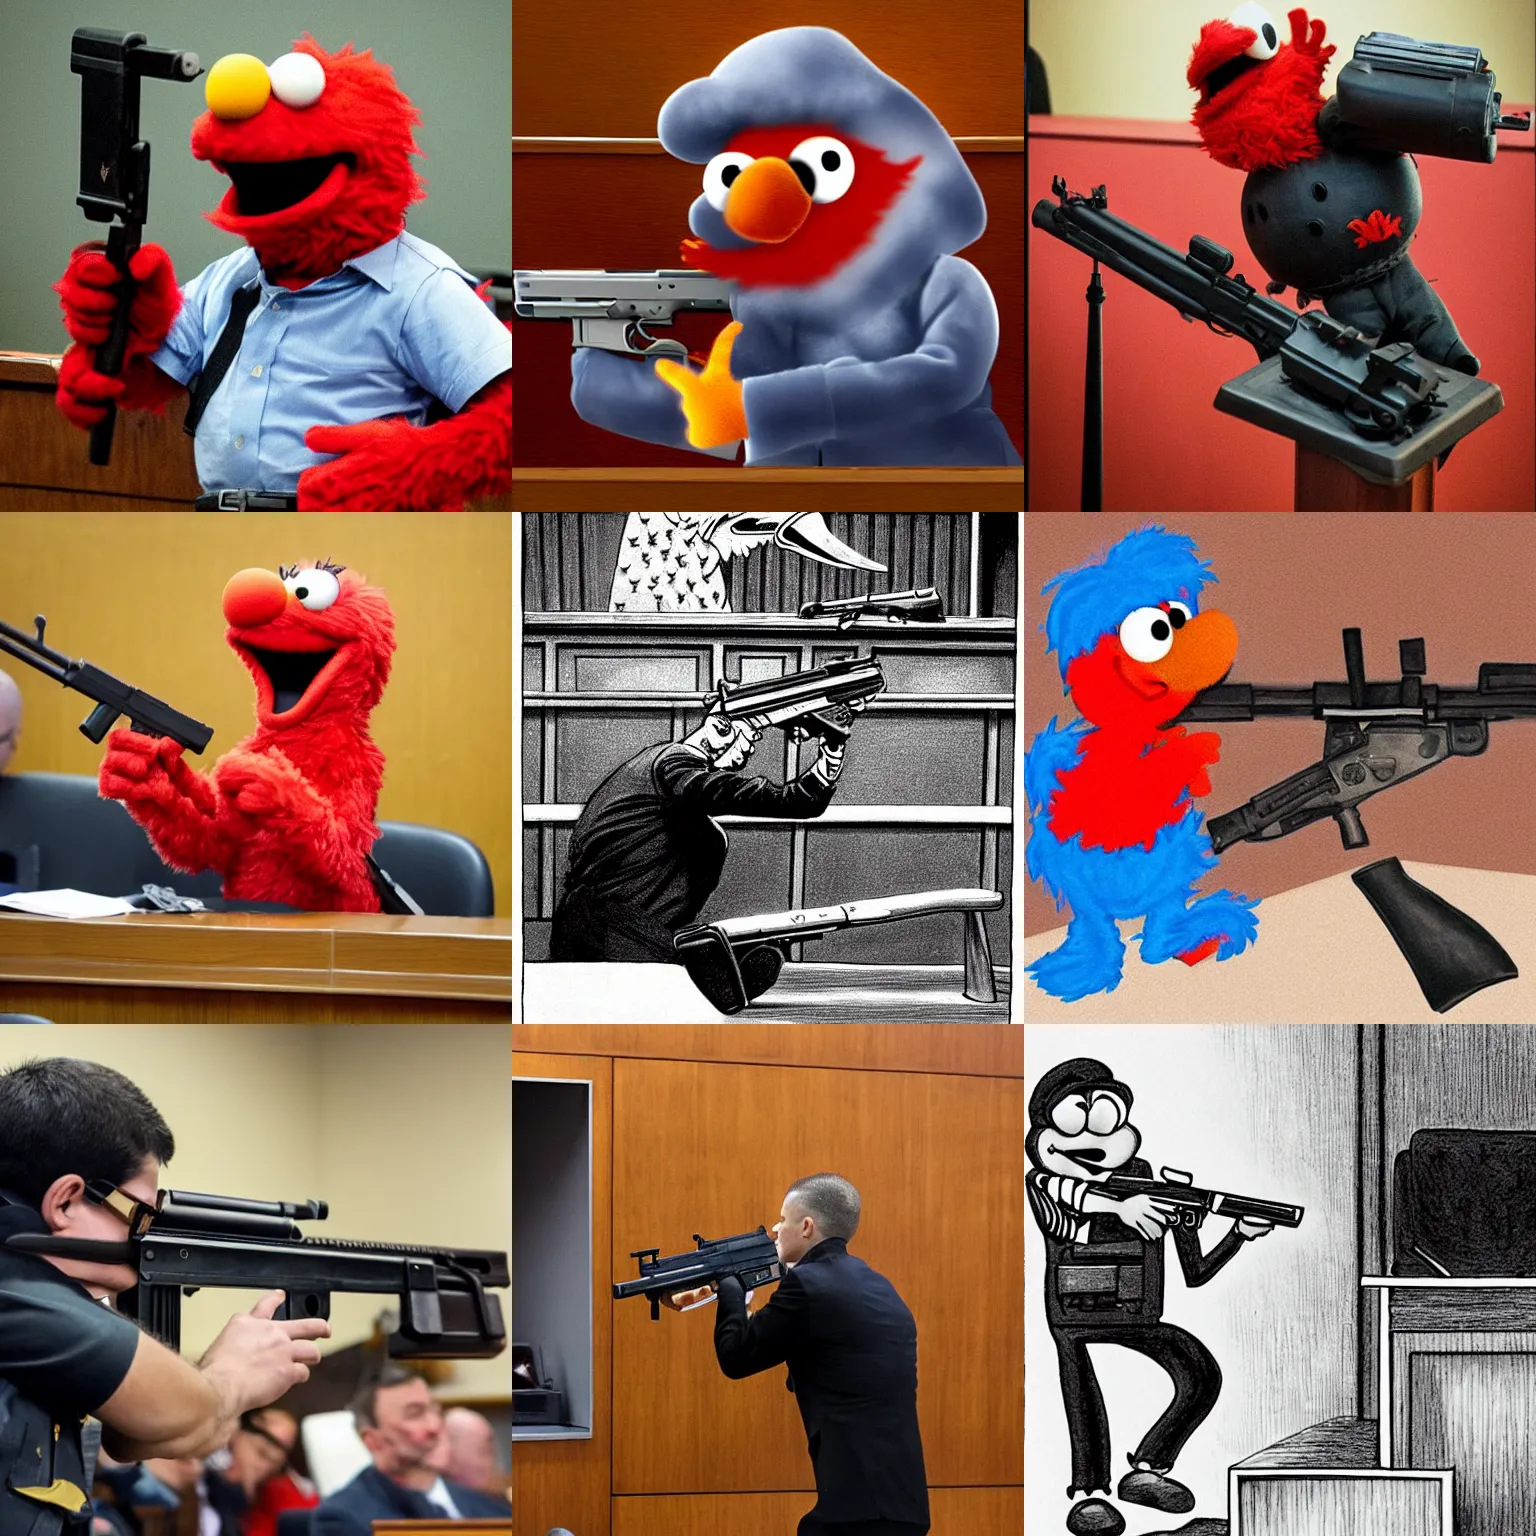 Prompt: Elmo firing a AK-47 in a courtroom